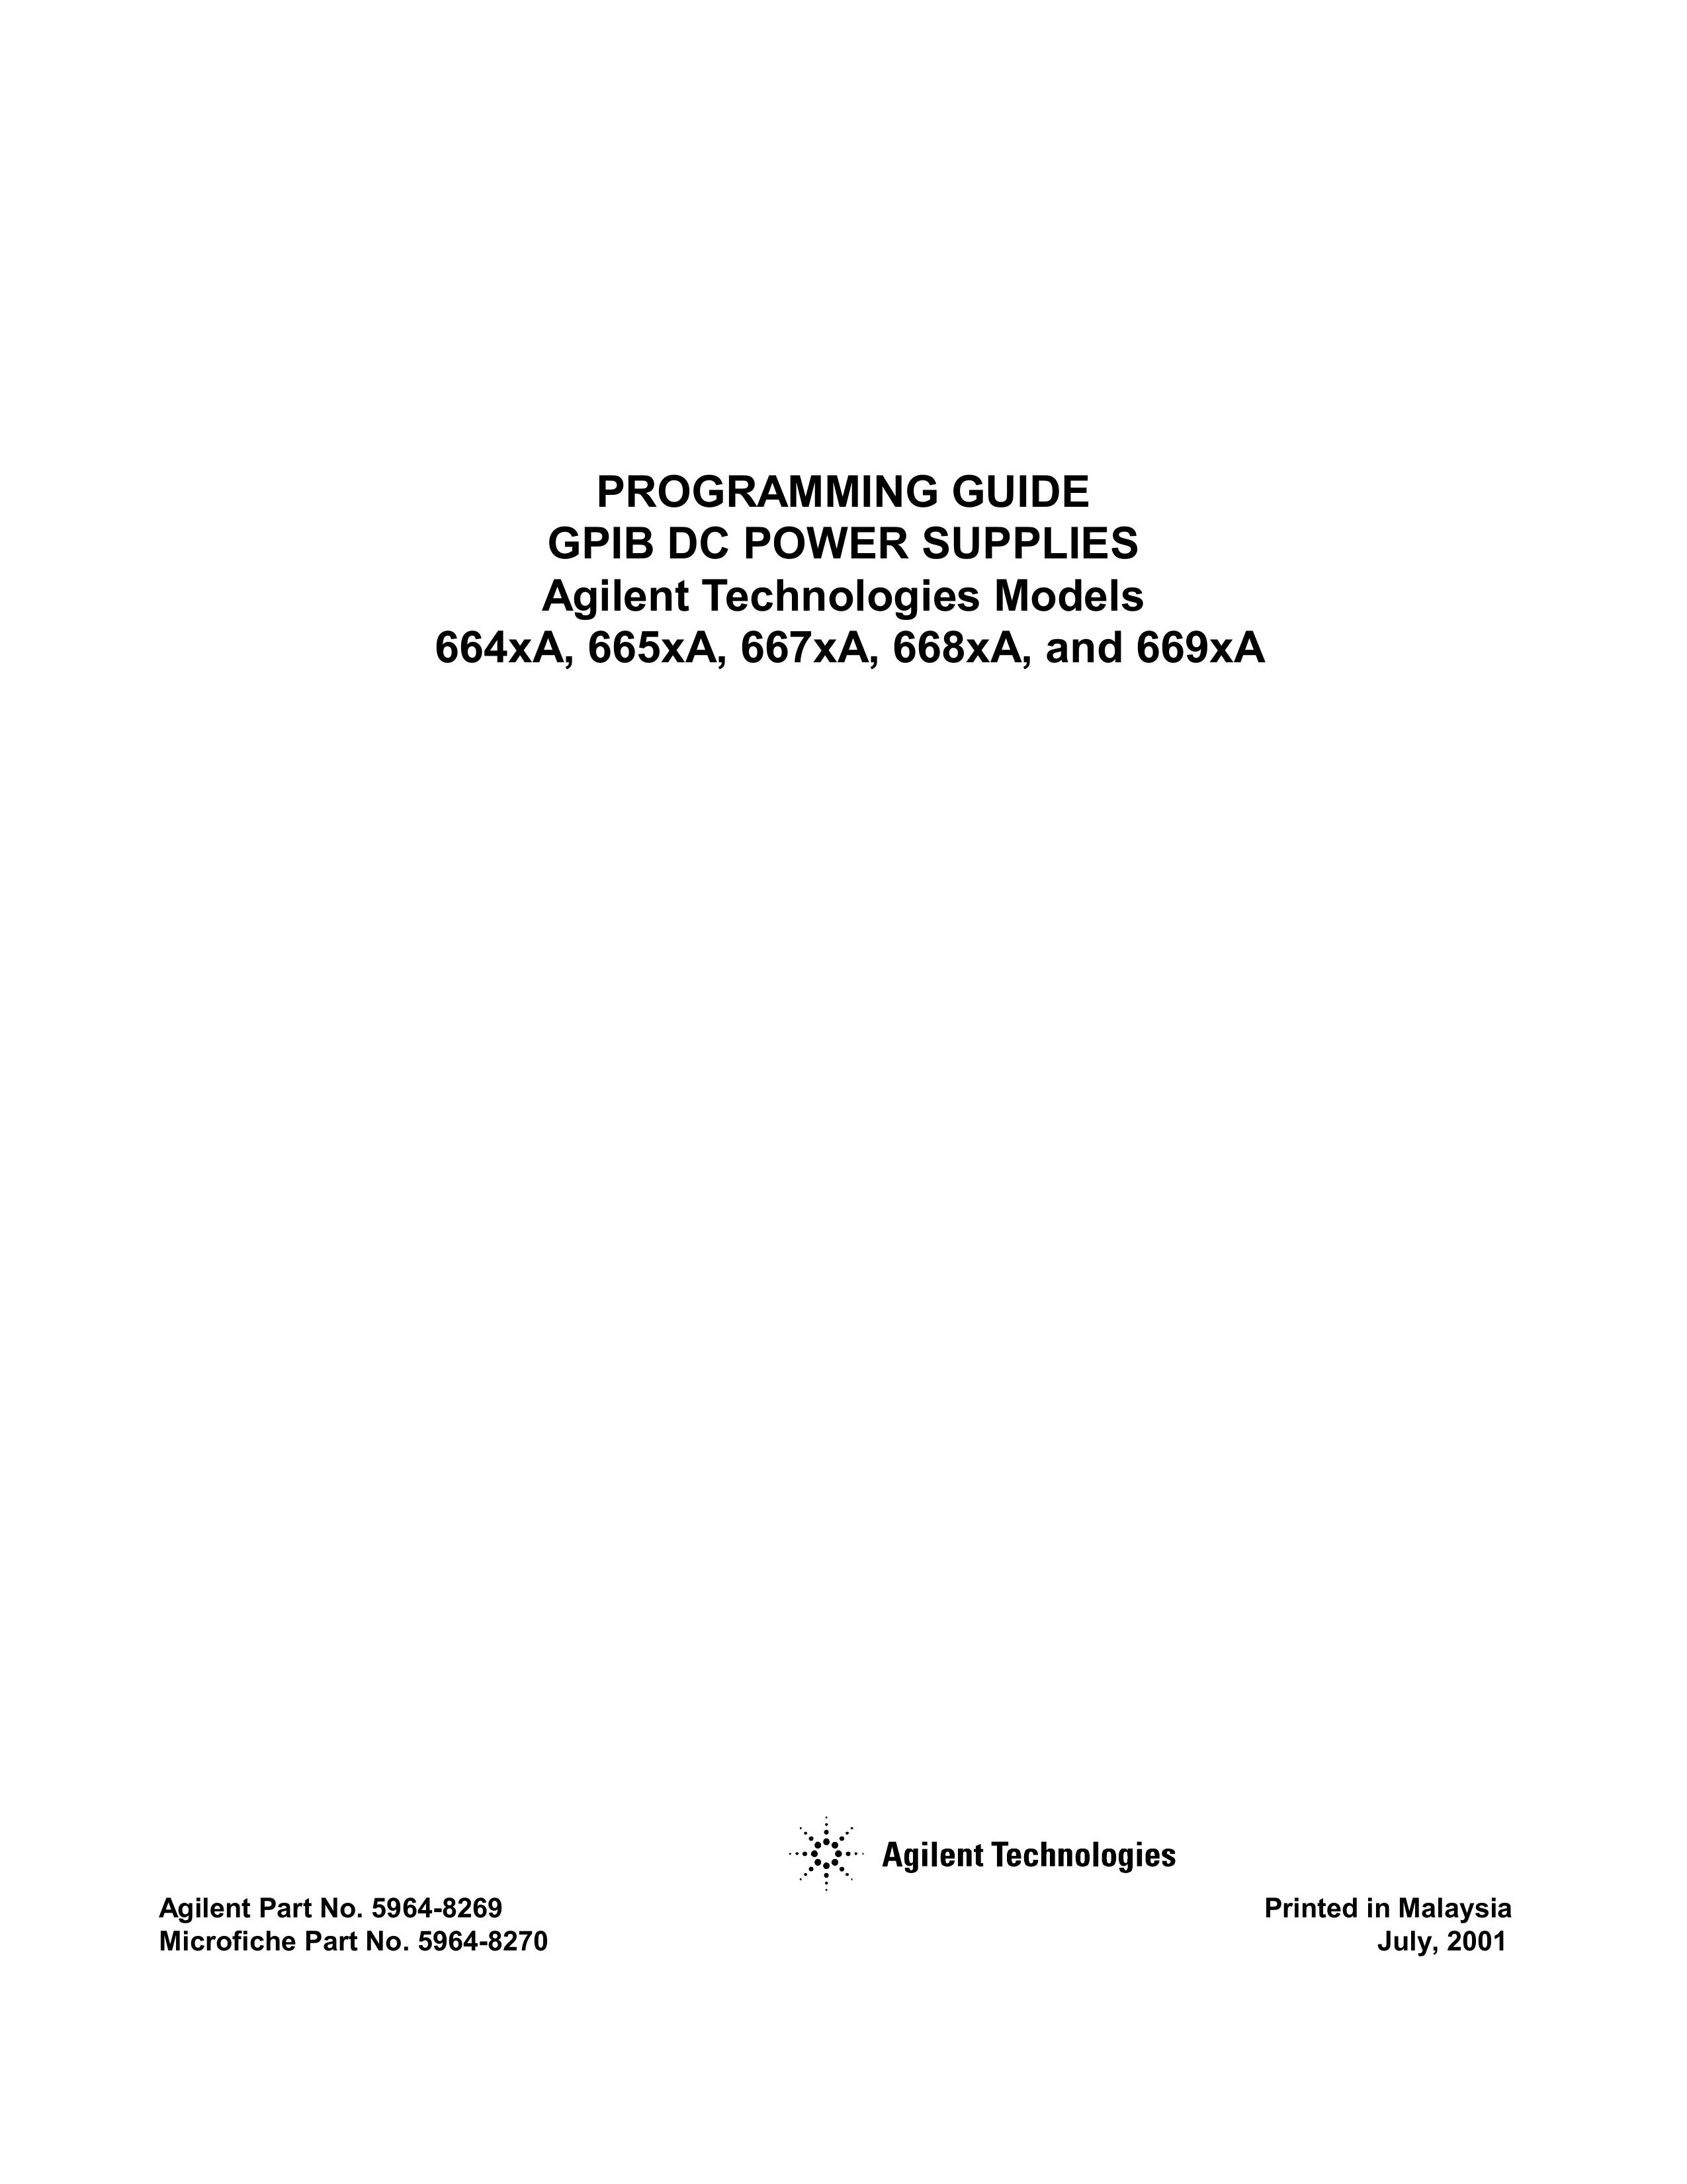 Agilent Technologies 669xA Portable Generator User Manual